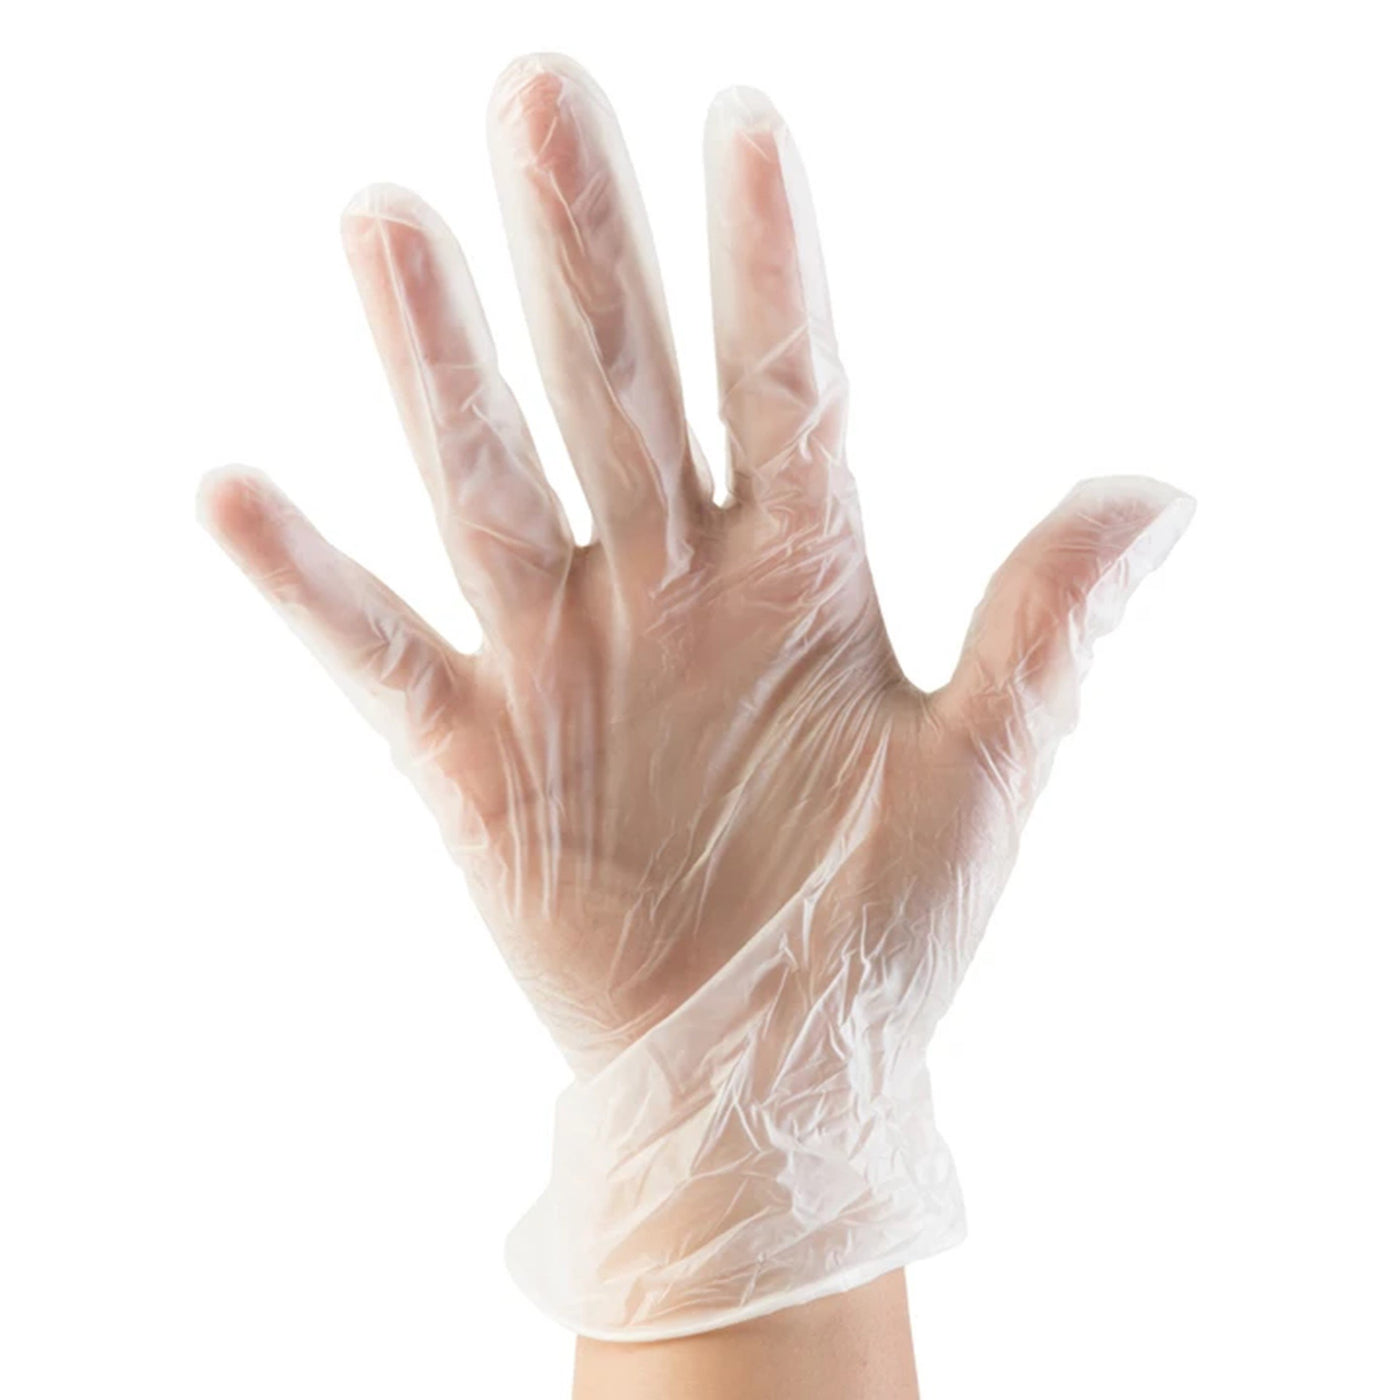 Clear Vinyl Disposable Gloves 100pk - Medium